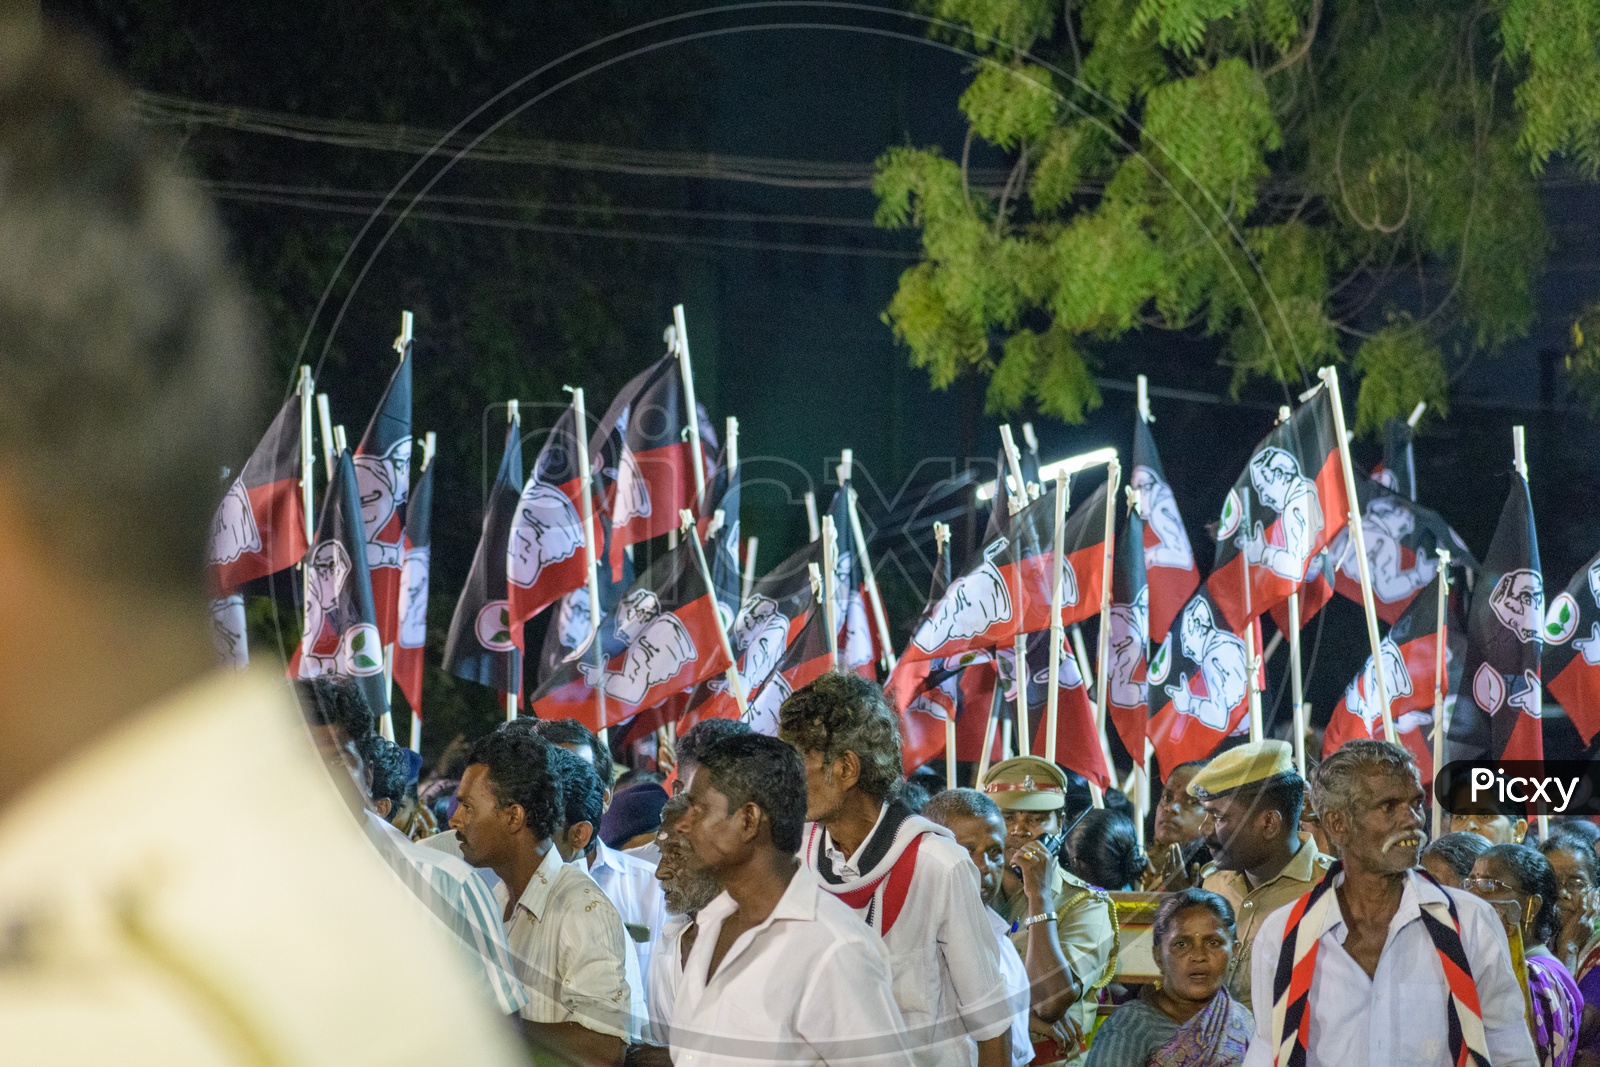 ADMK Party cadres with ADMK Flag for loksabha election compaign